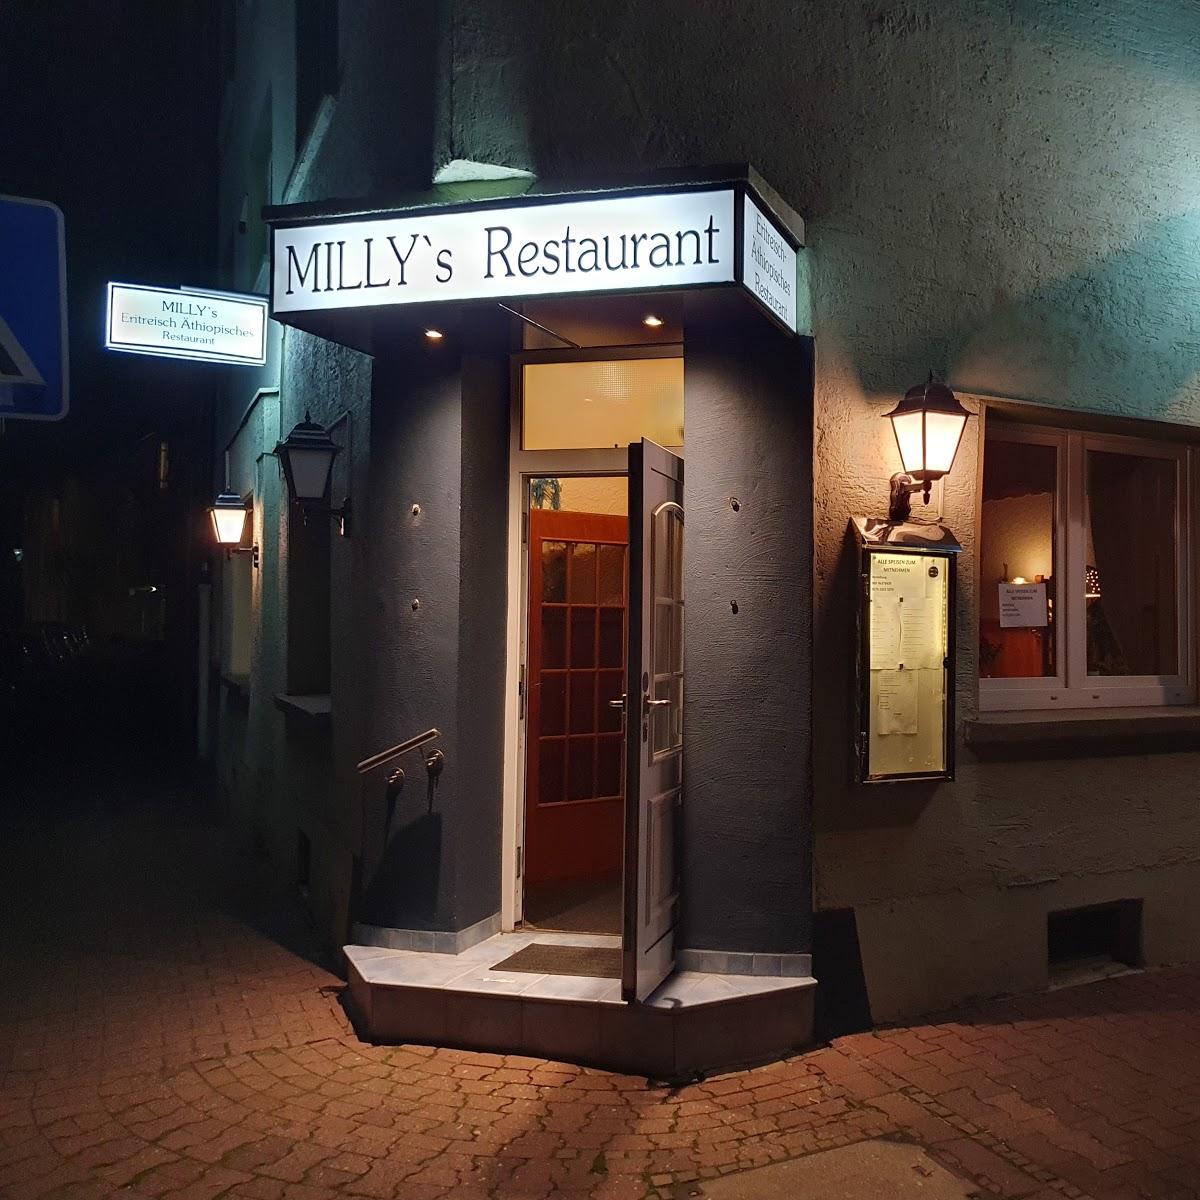 Restaurant "Milly